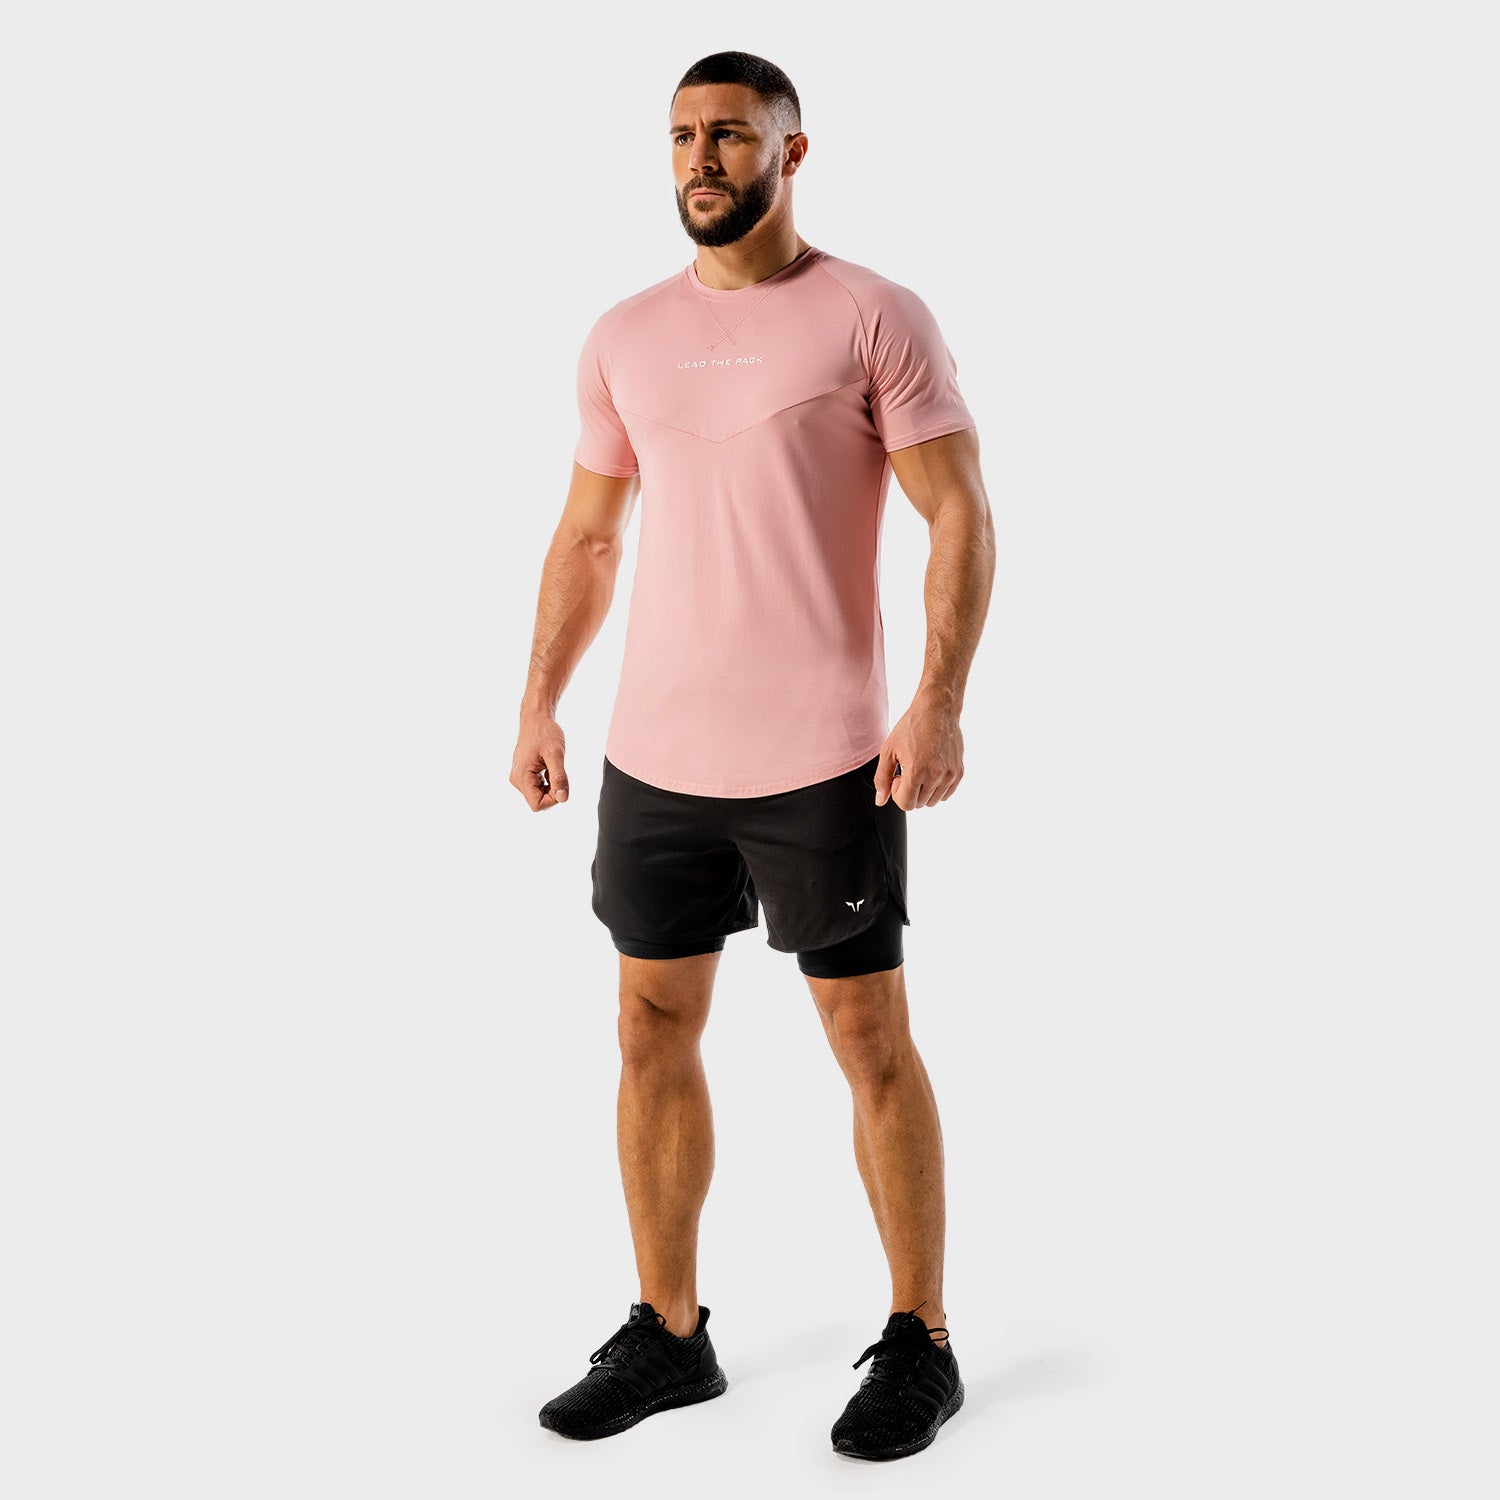 squatwolf-gym-wear-statement-tee-pink-workout-shirts-for-men